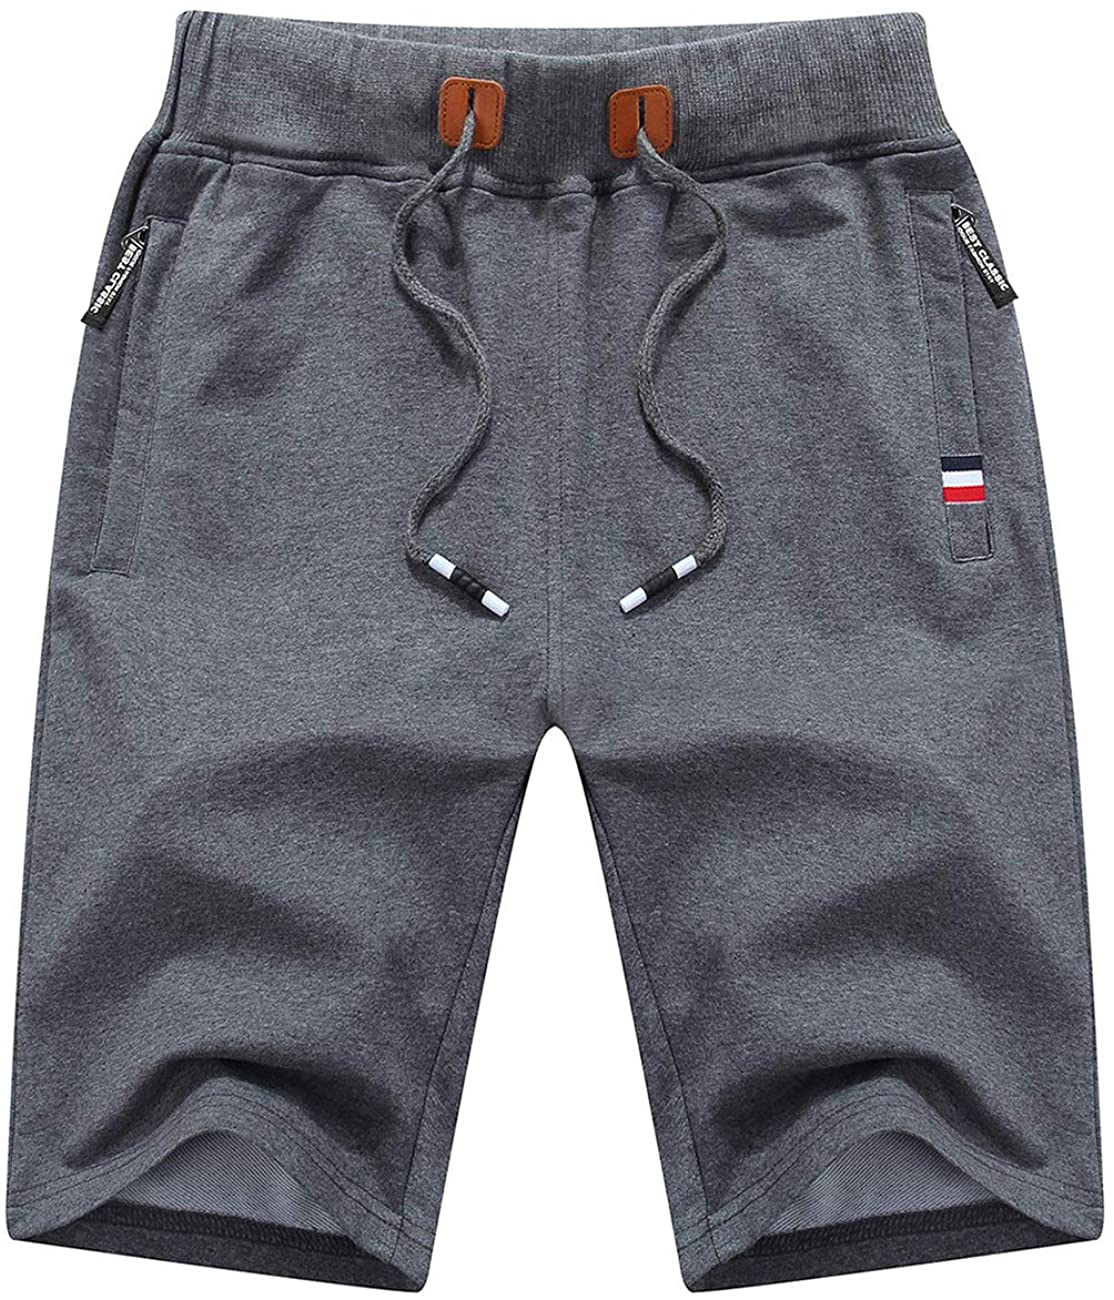 Tansozer Mens Casual Sports Shorts with Elastic Waist Zipper Pockets 